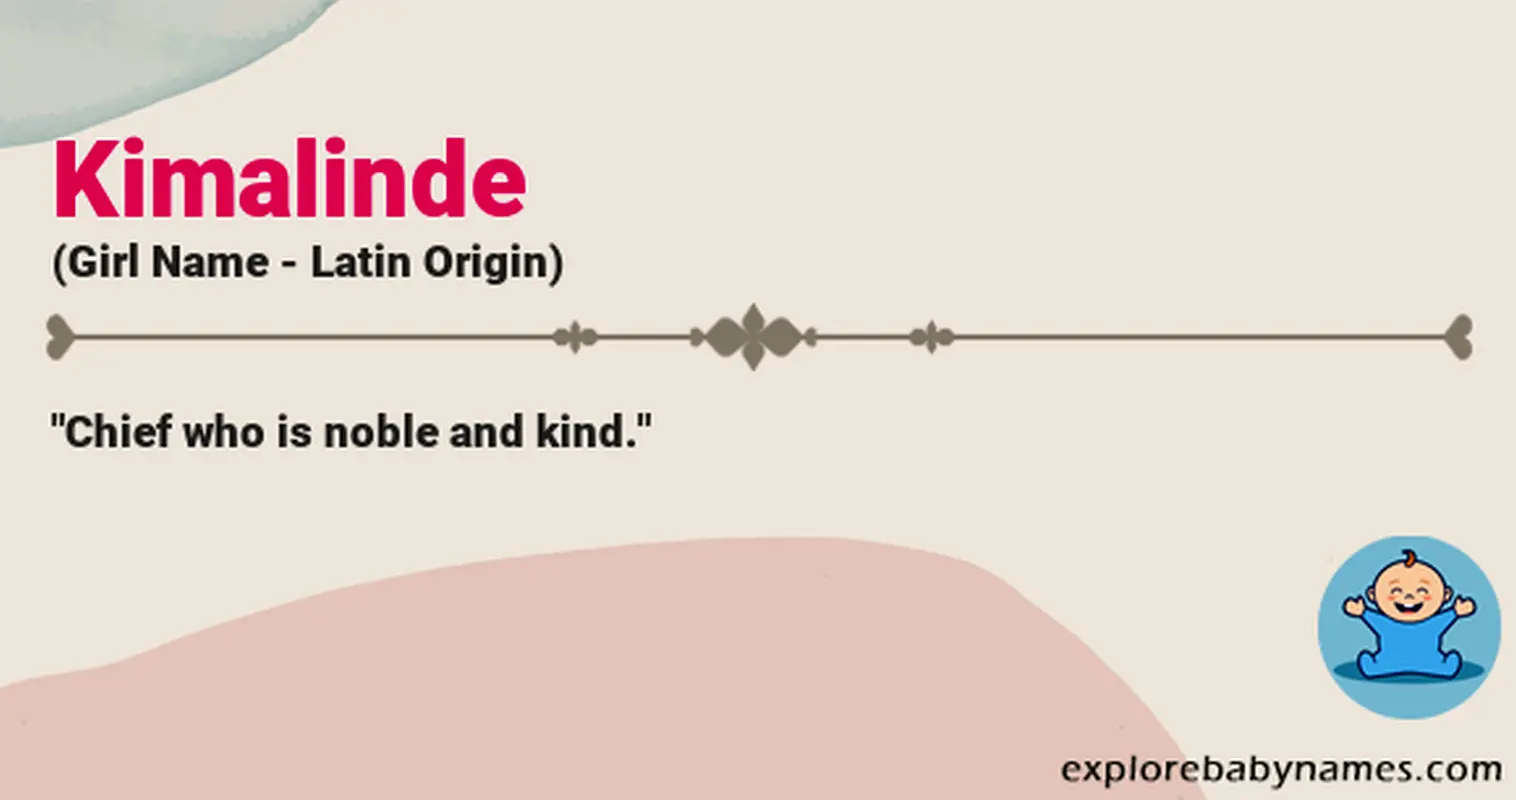 Meaning of Kimalinde